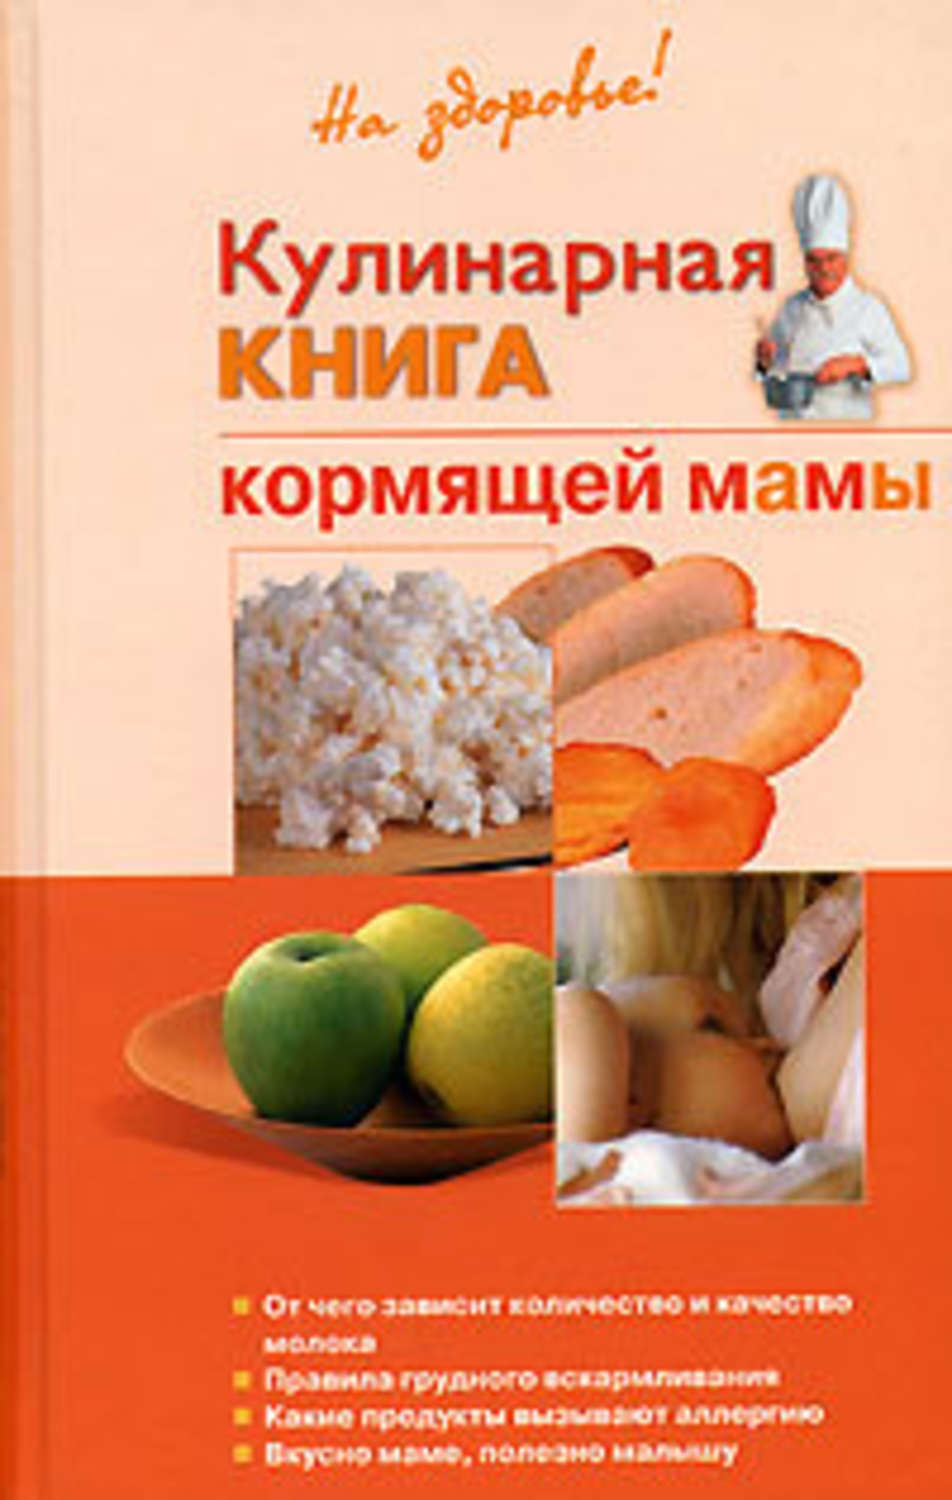 Кухня кормящей матери. Кулинарная книга. Кулинарная книга кормящей матери. Кулинария книга. Кулинарная книга мамы.